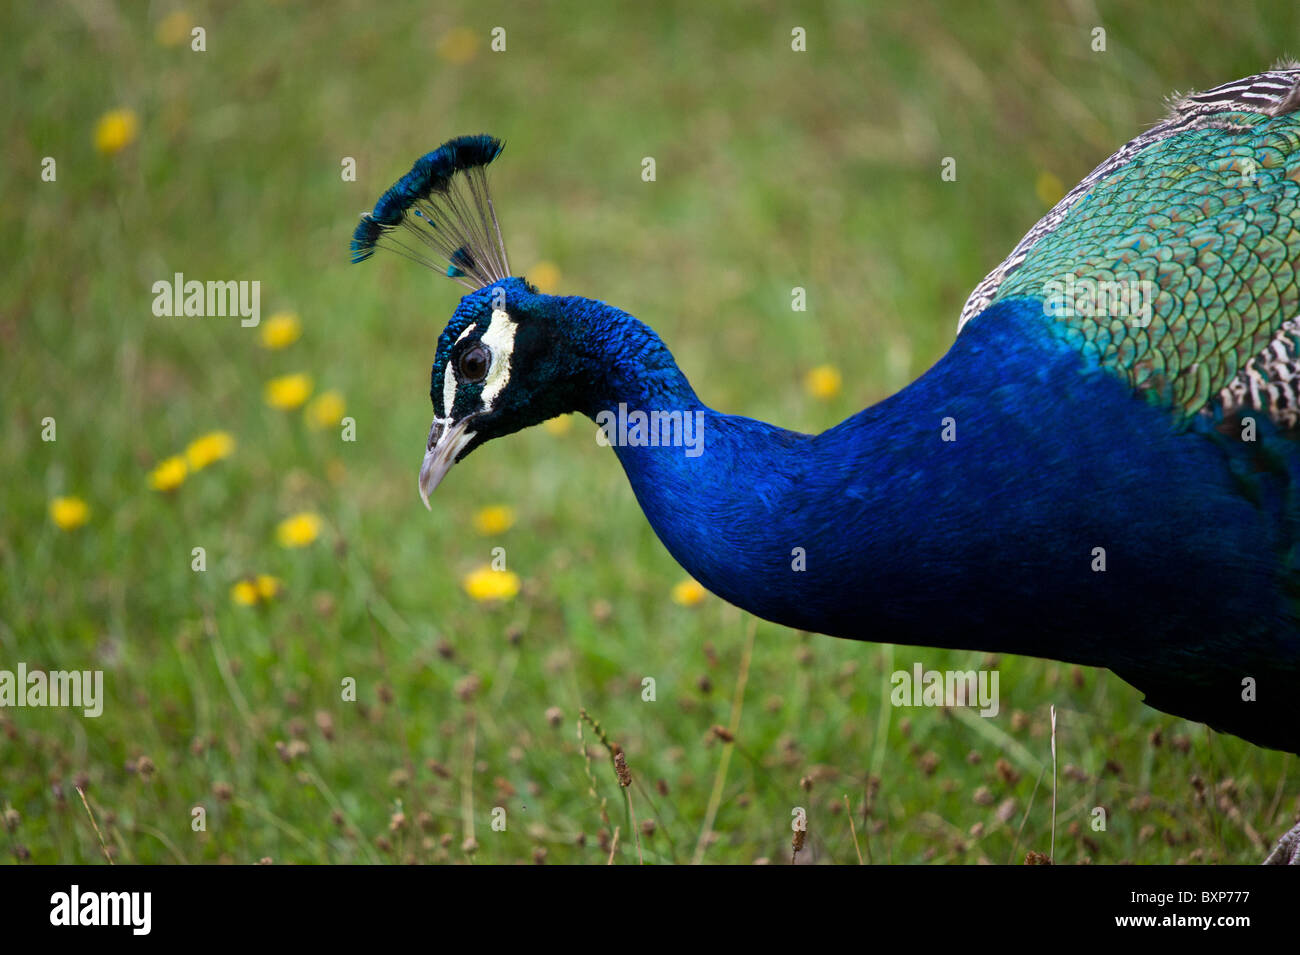 A mature peacock Stock Photo